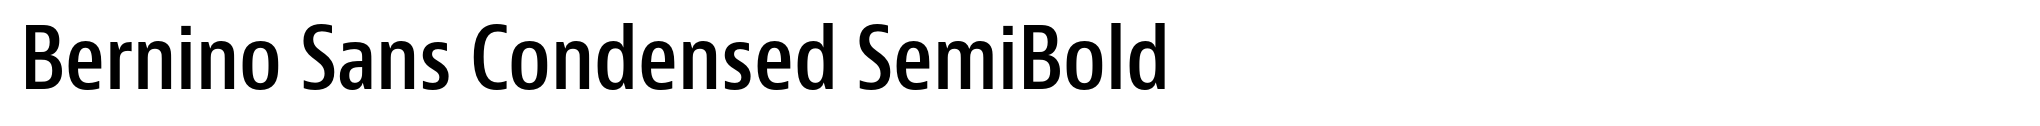 Bernino Sans Condensed SemiBold image